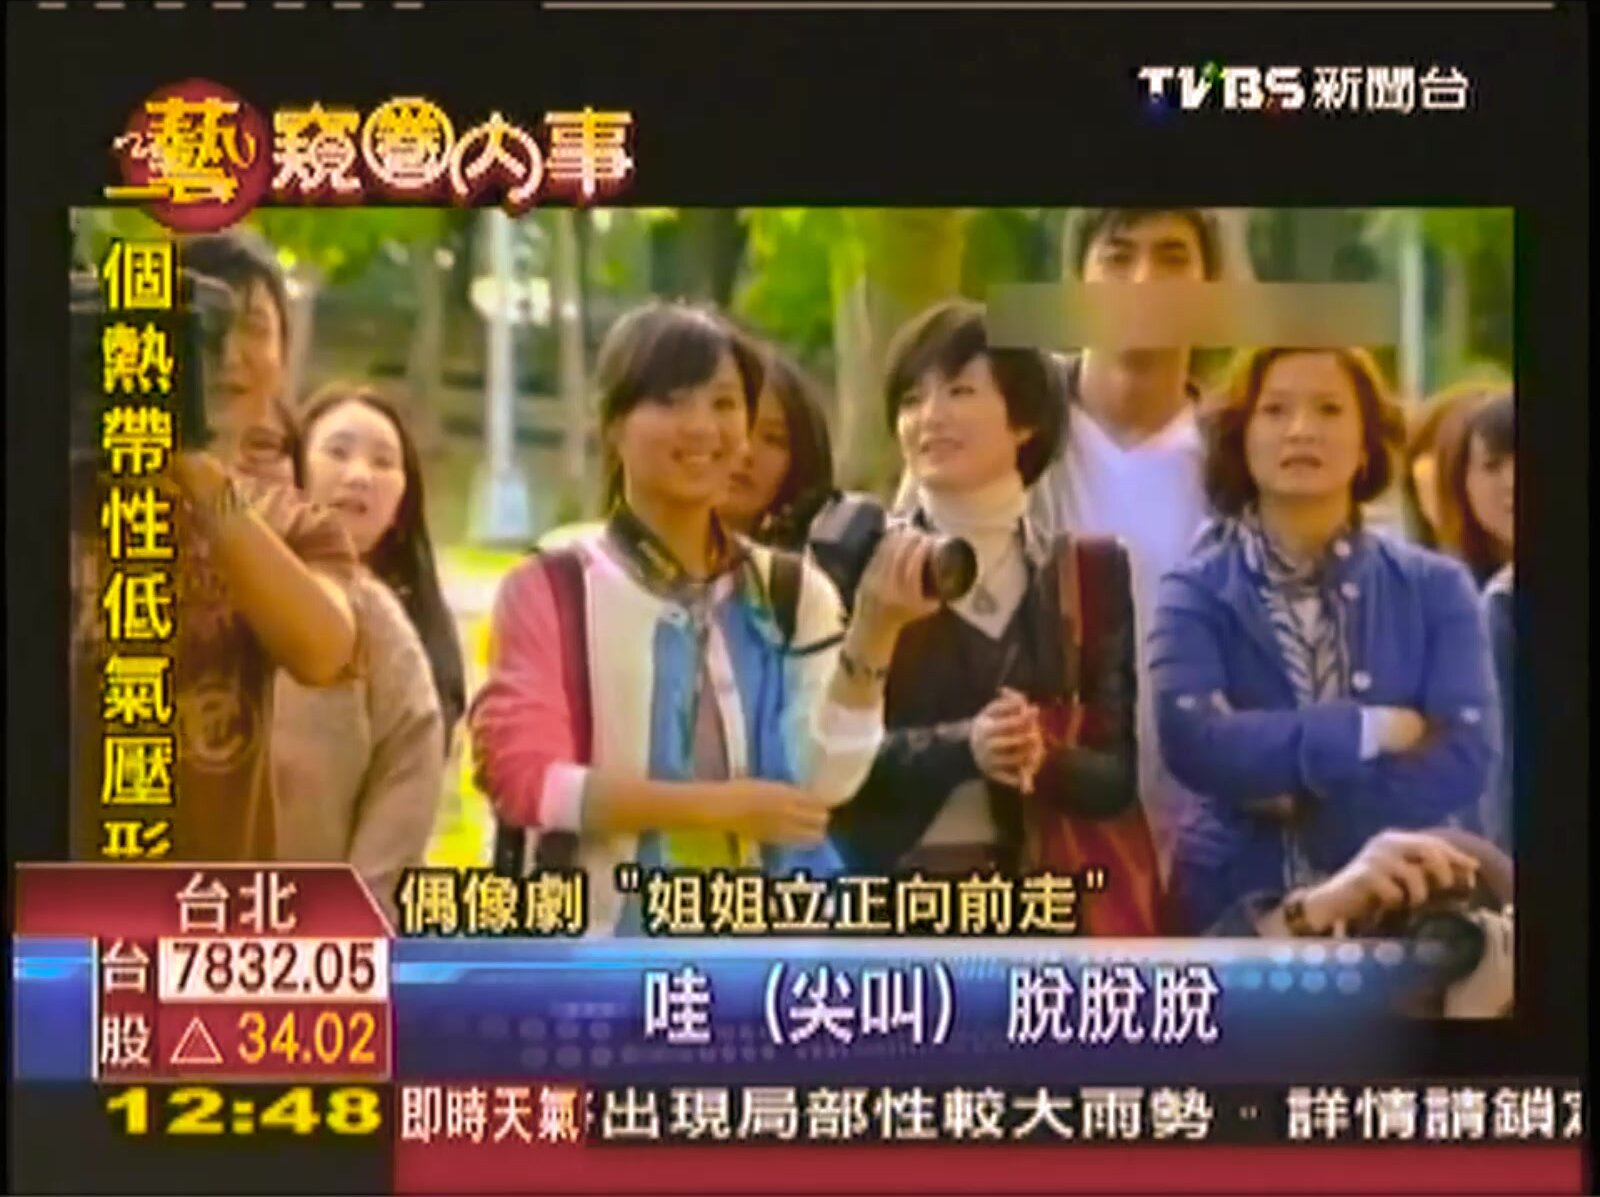 CFNM Chinese TV both versions